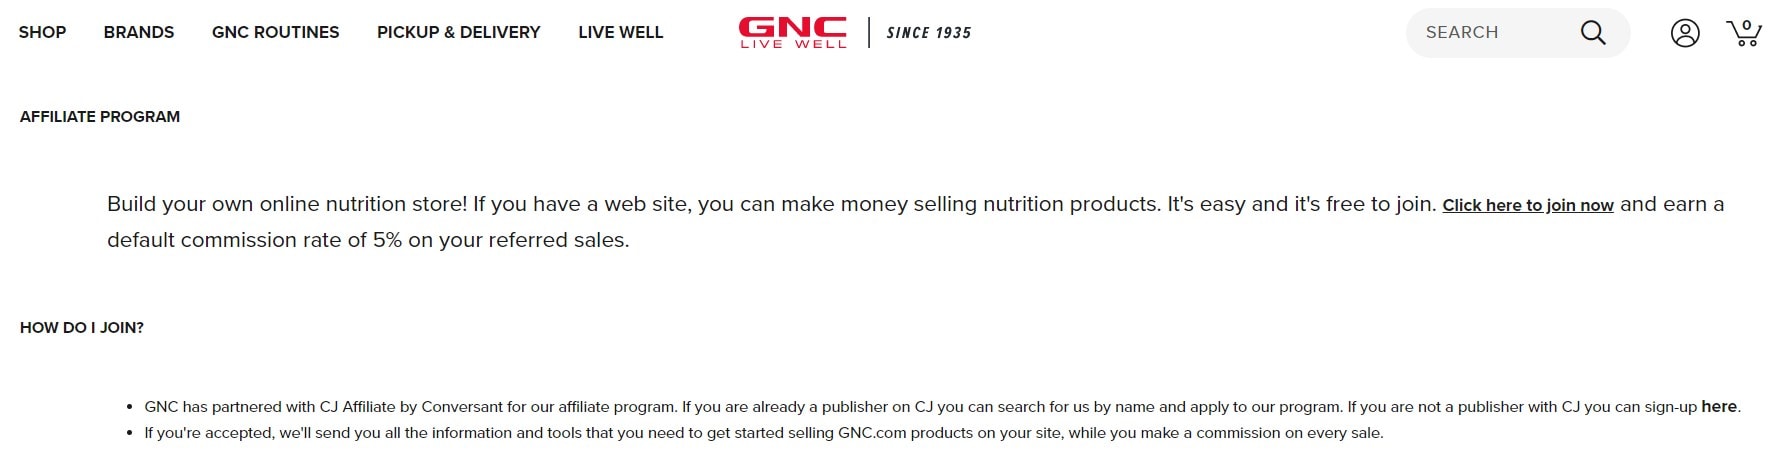 GNC affiliate program